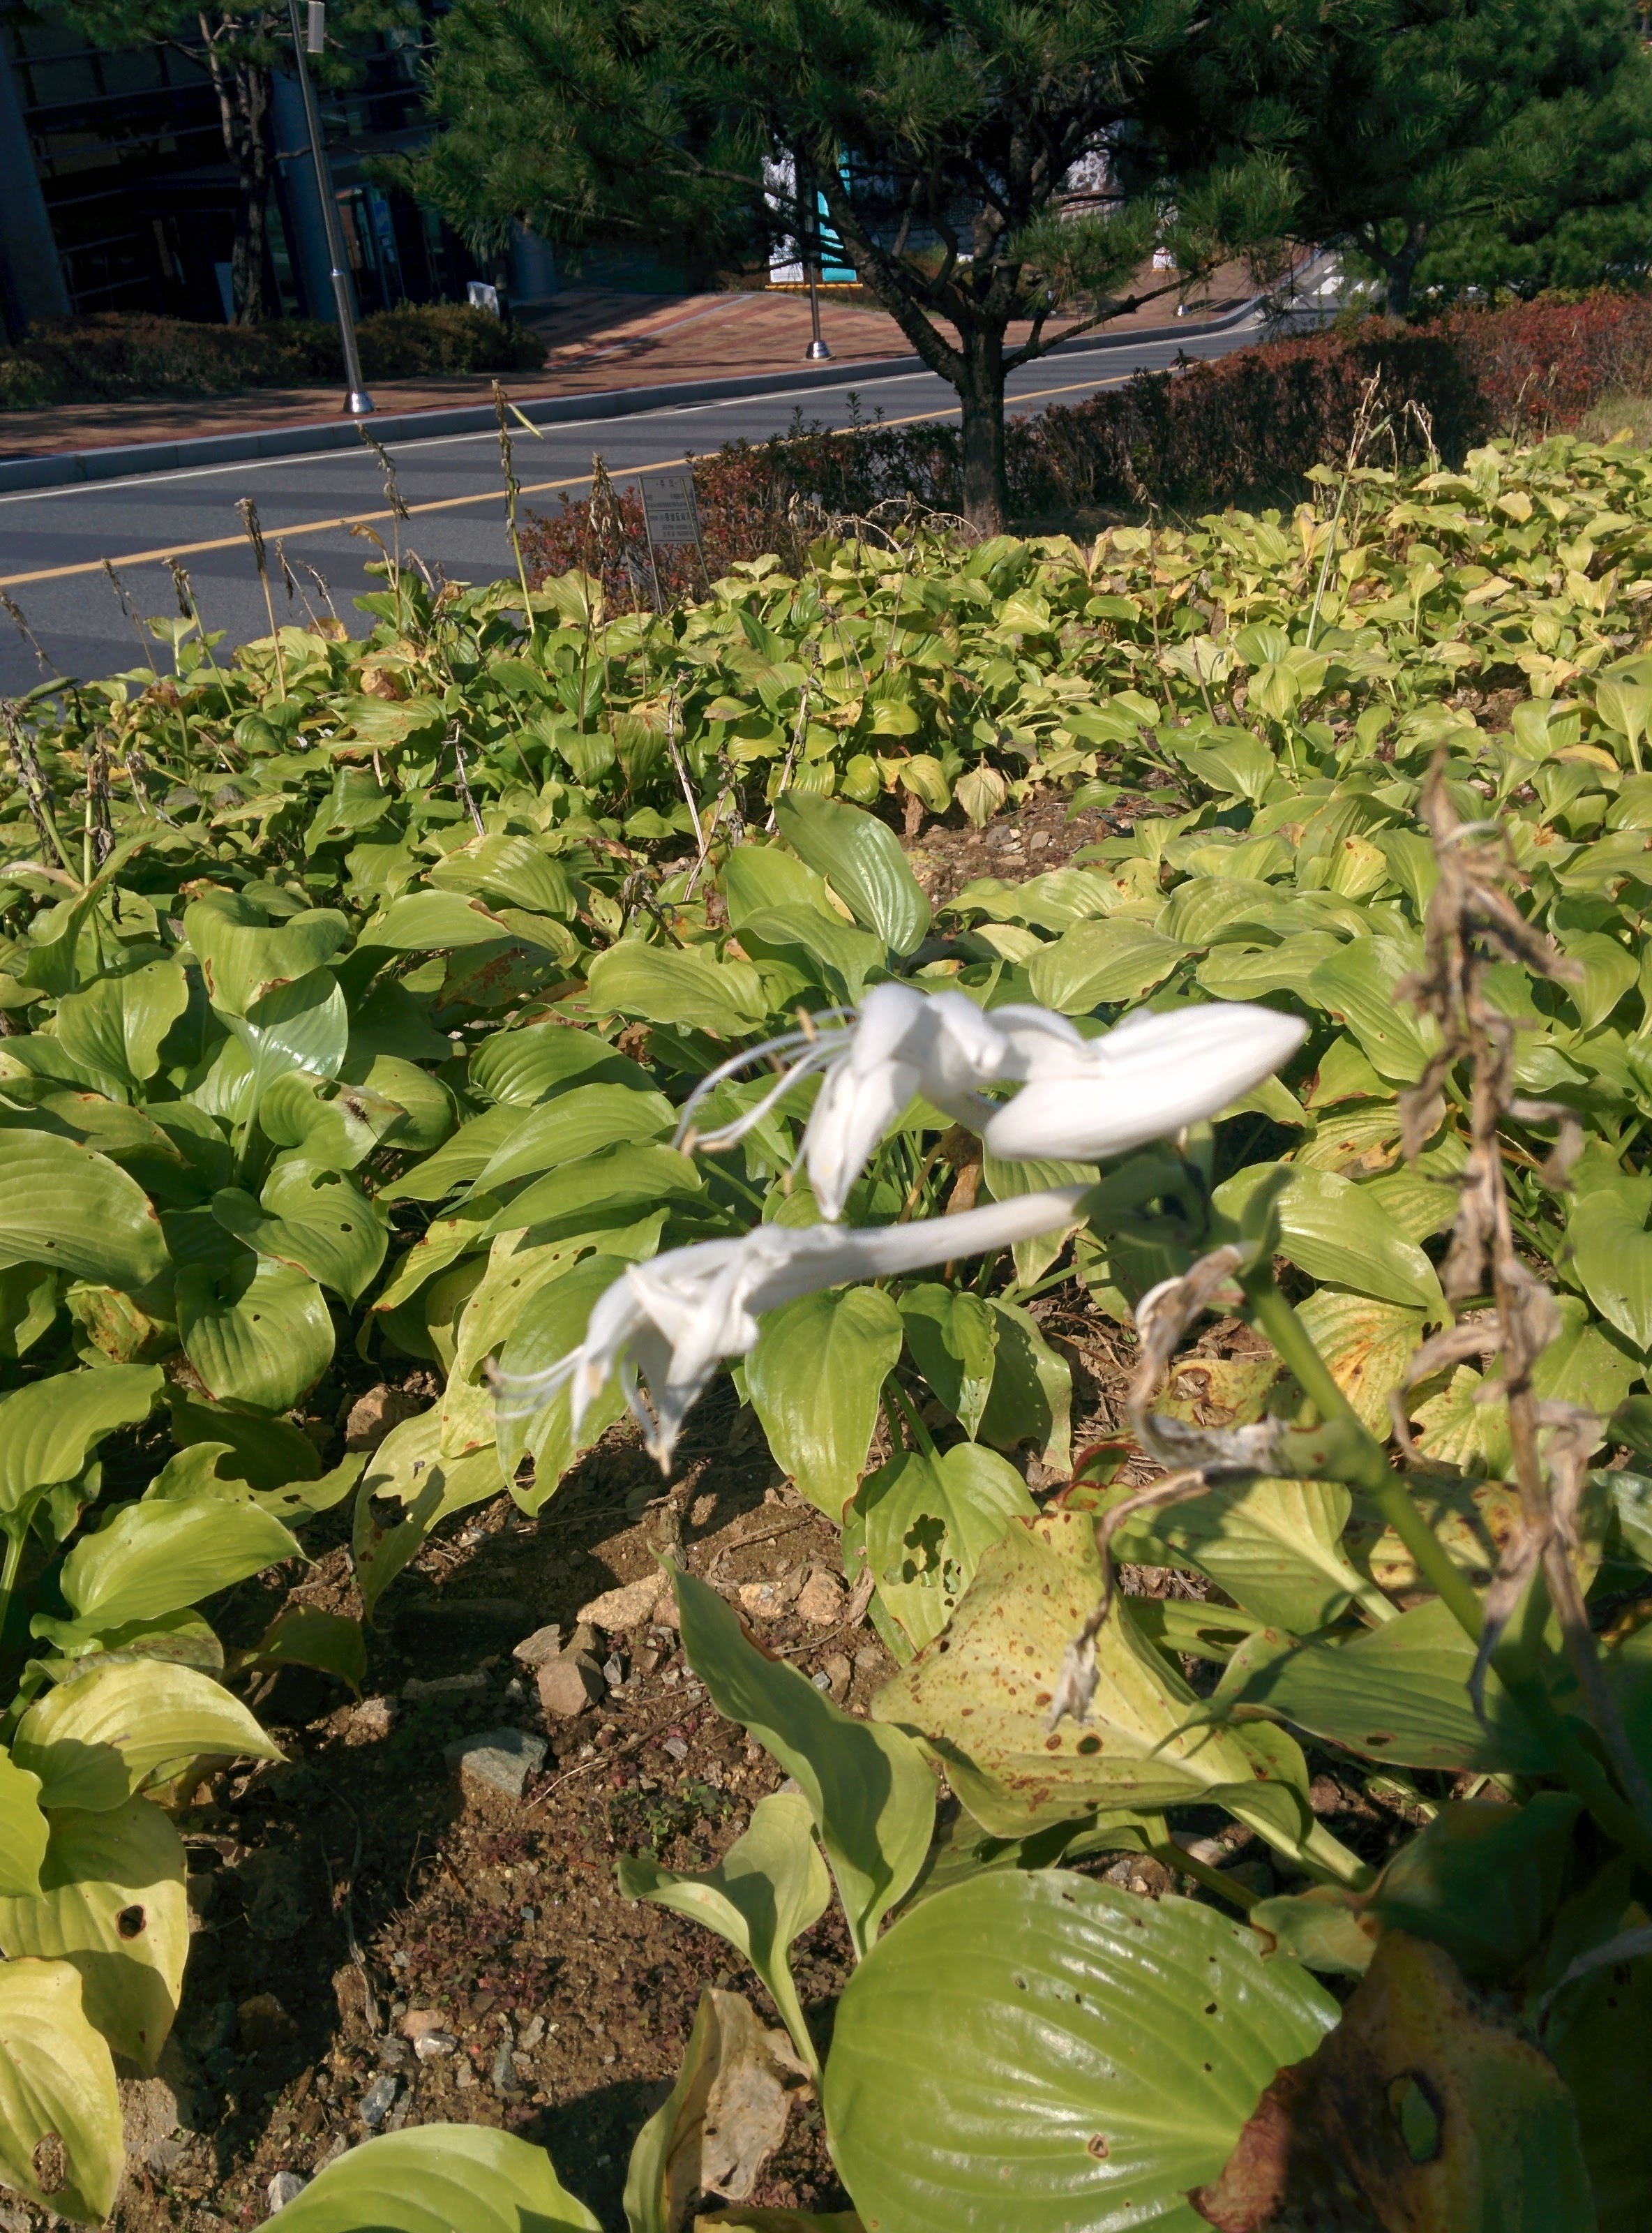 IMG_20151014_123116.jpg 아직 하얀색 꽃을 피운 옥잠화 밭